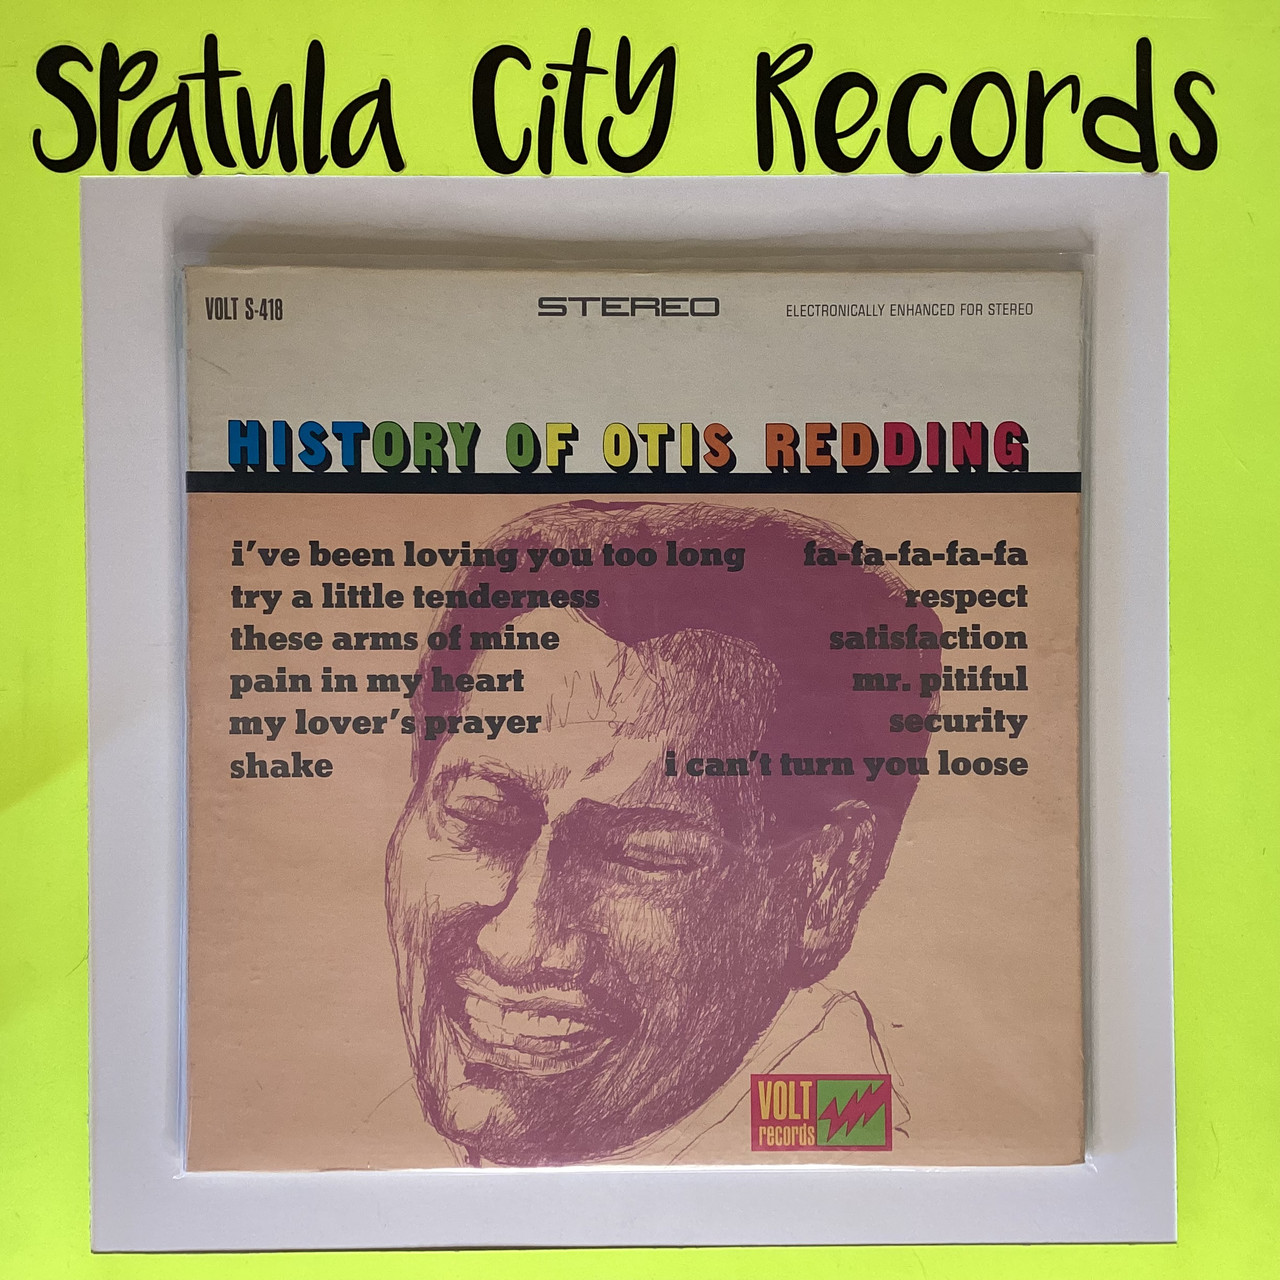 Otis Redding - History of Otis Redding - vinyl record album LP